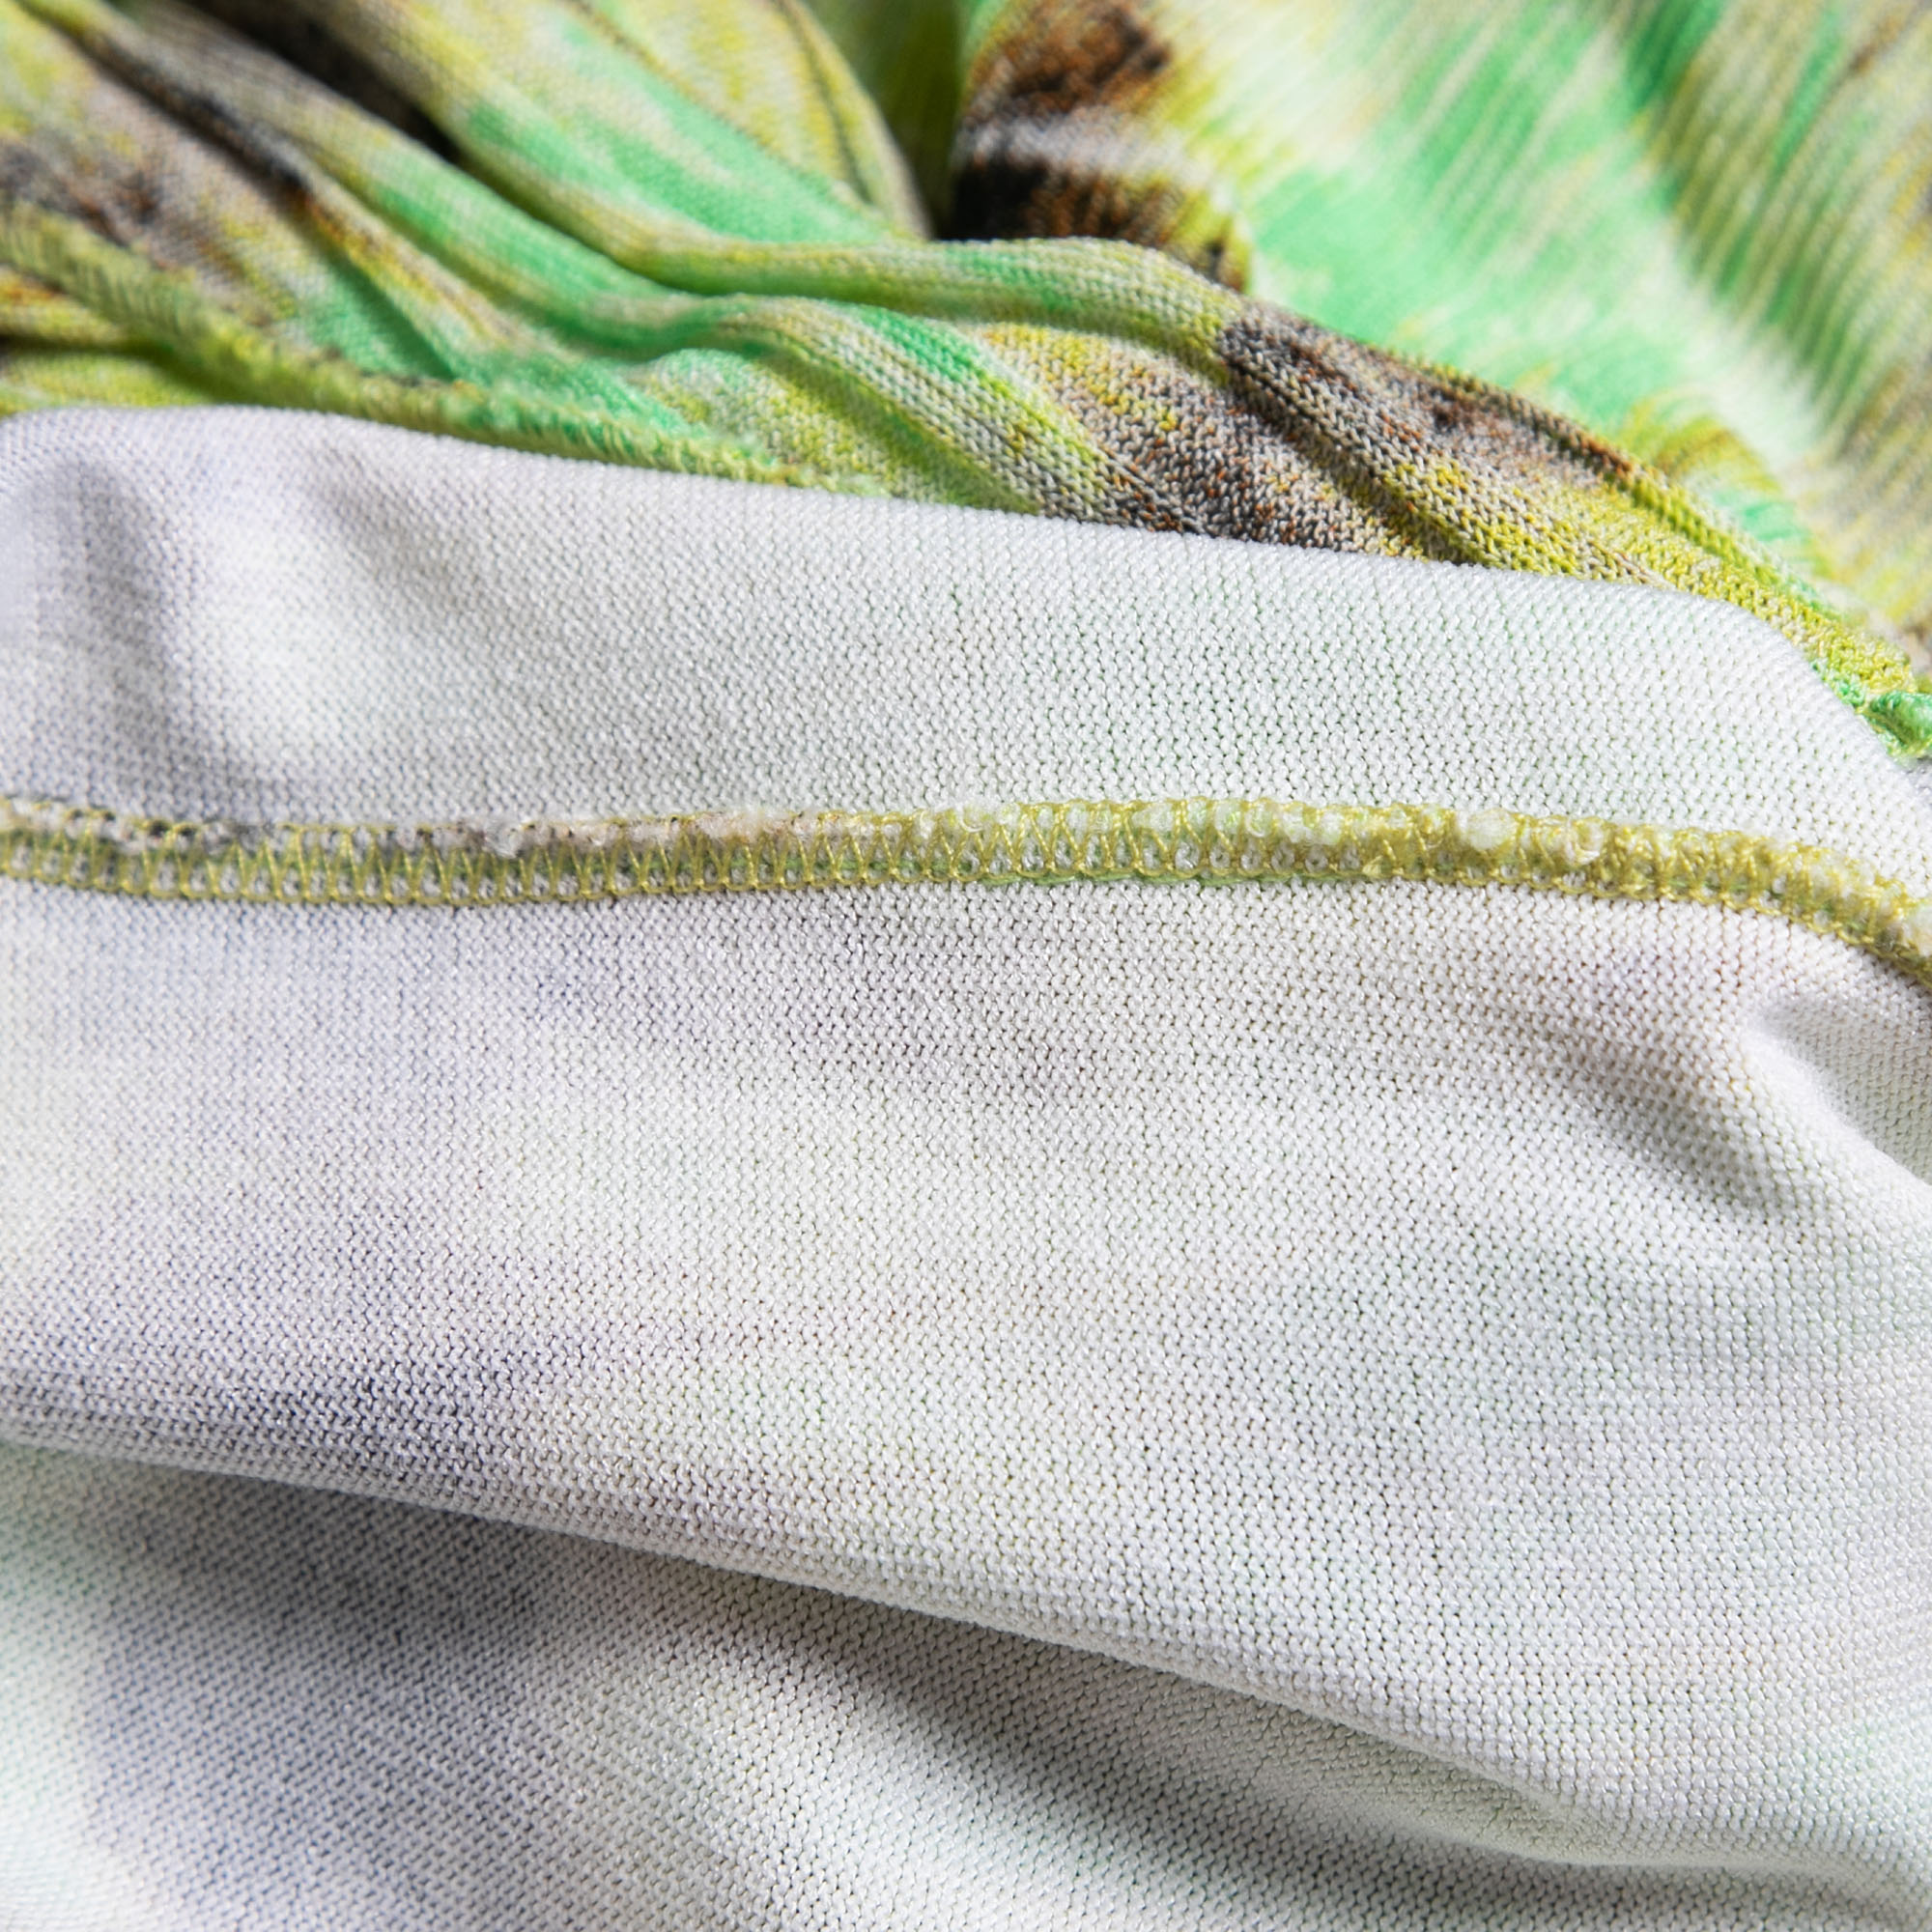 Roberto Cavalli Neon Green/Yellow Abstract Print Jersey Frilled Sleeveless Short Dress S